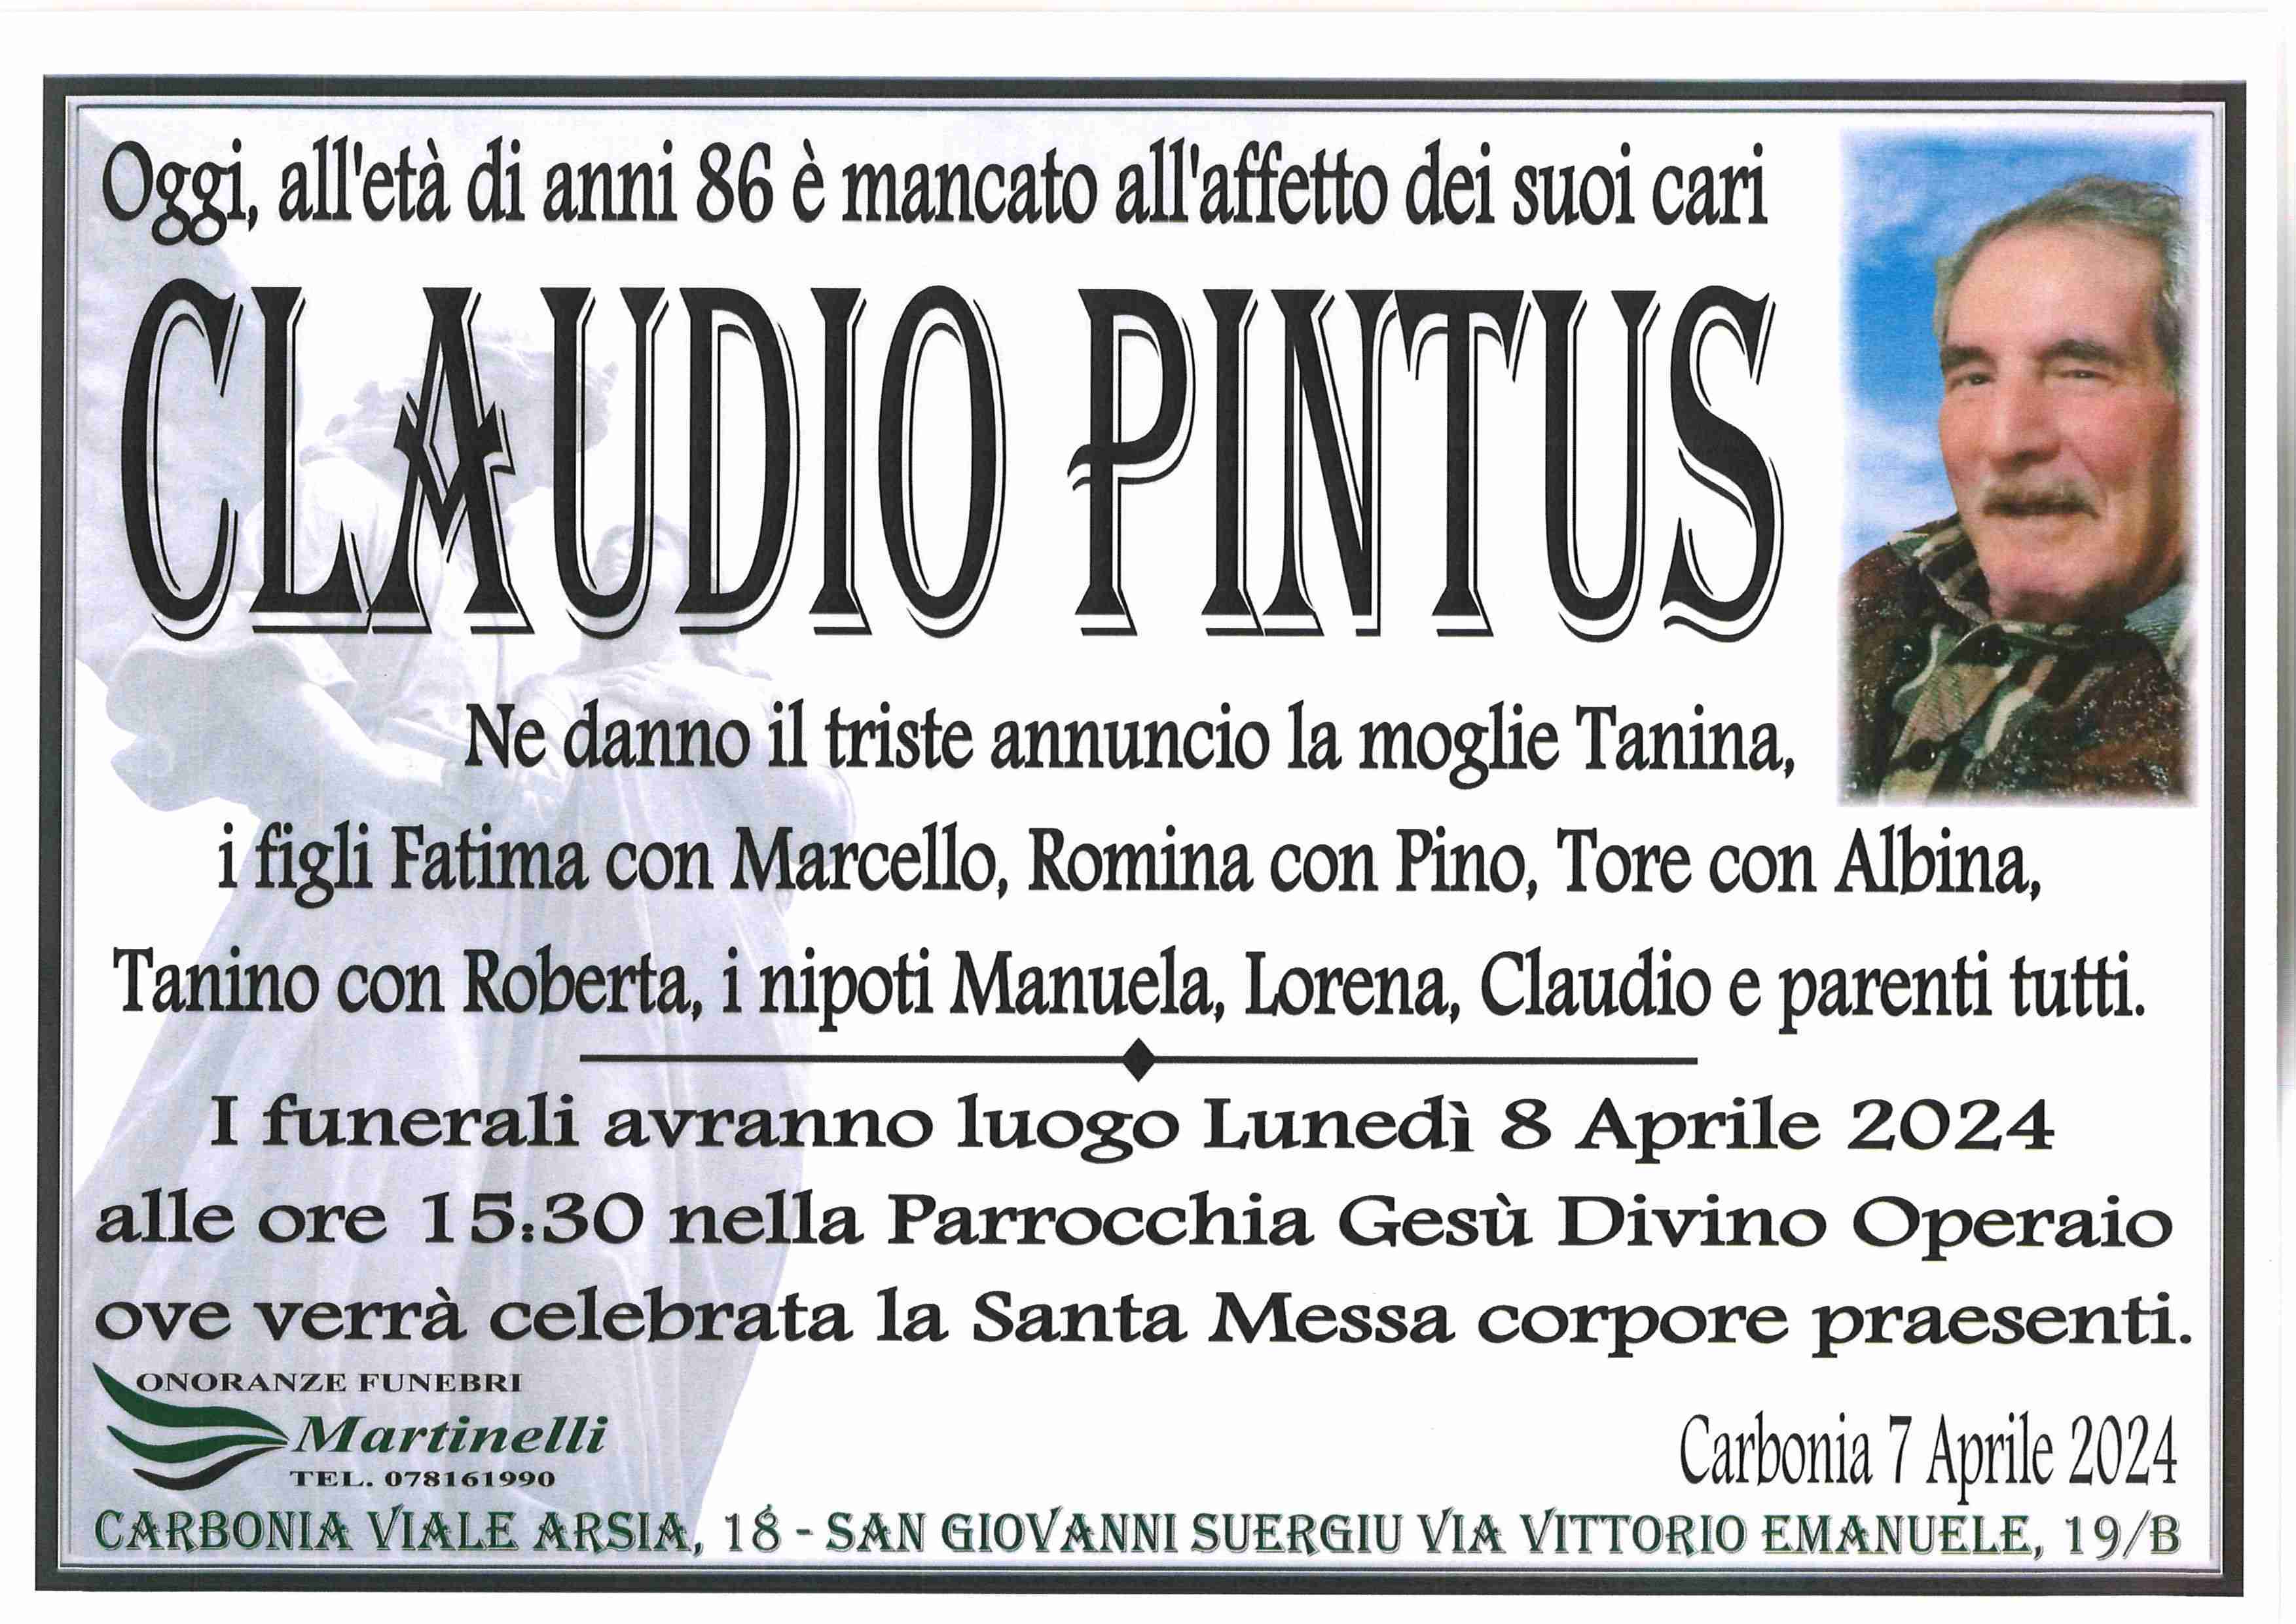 Claudio Pintus